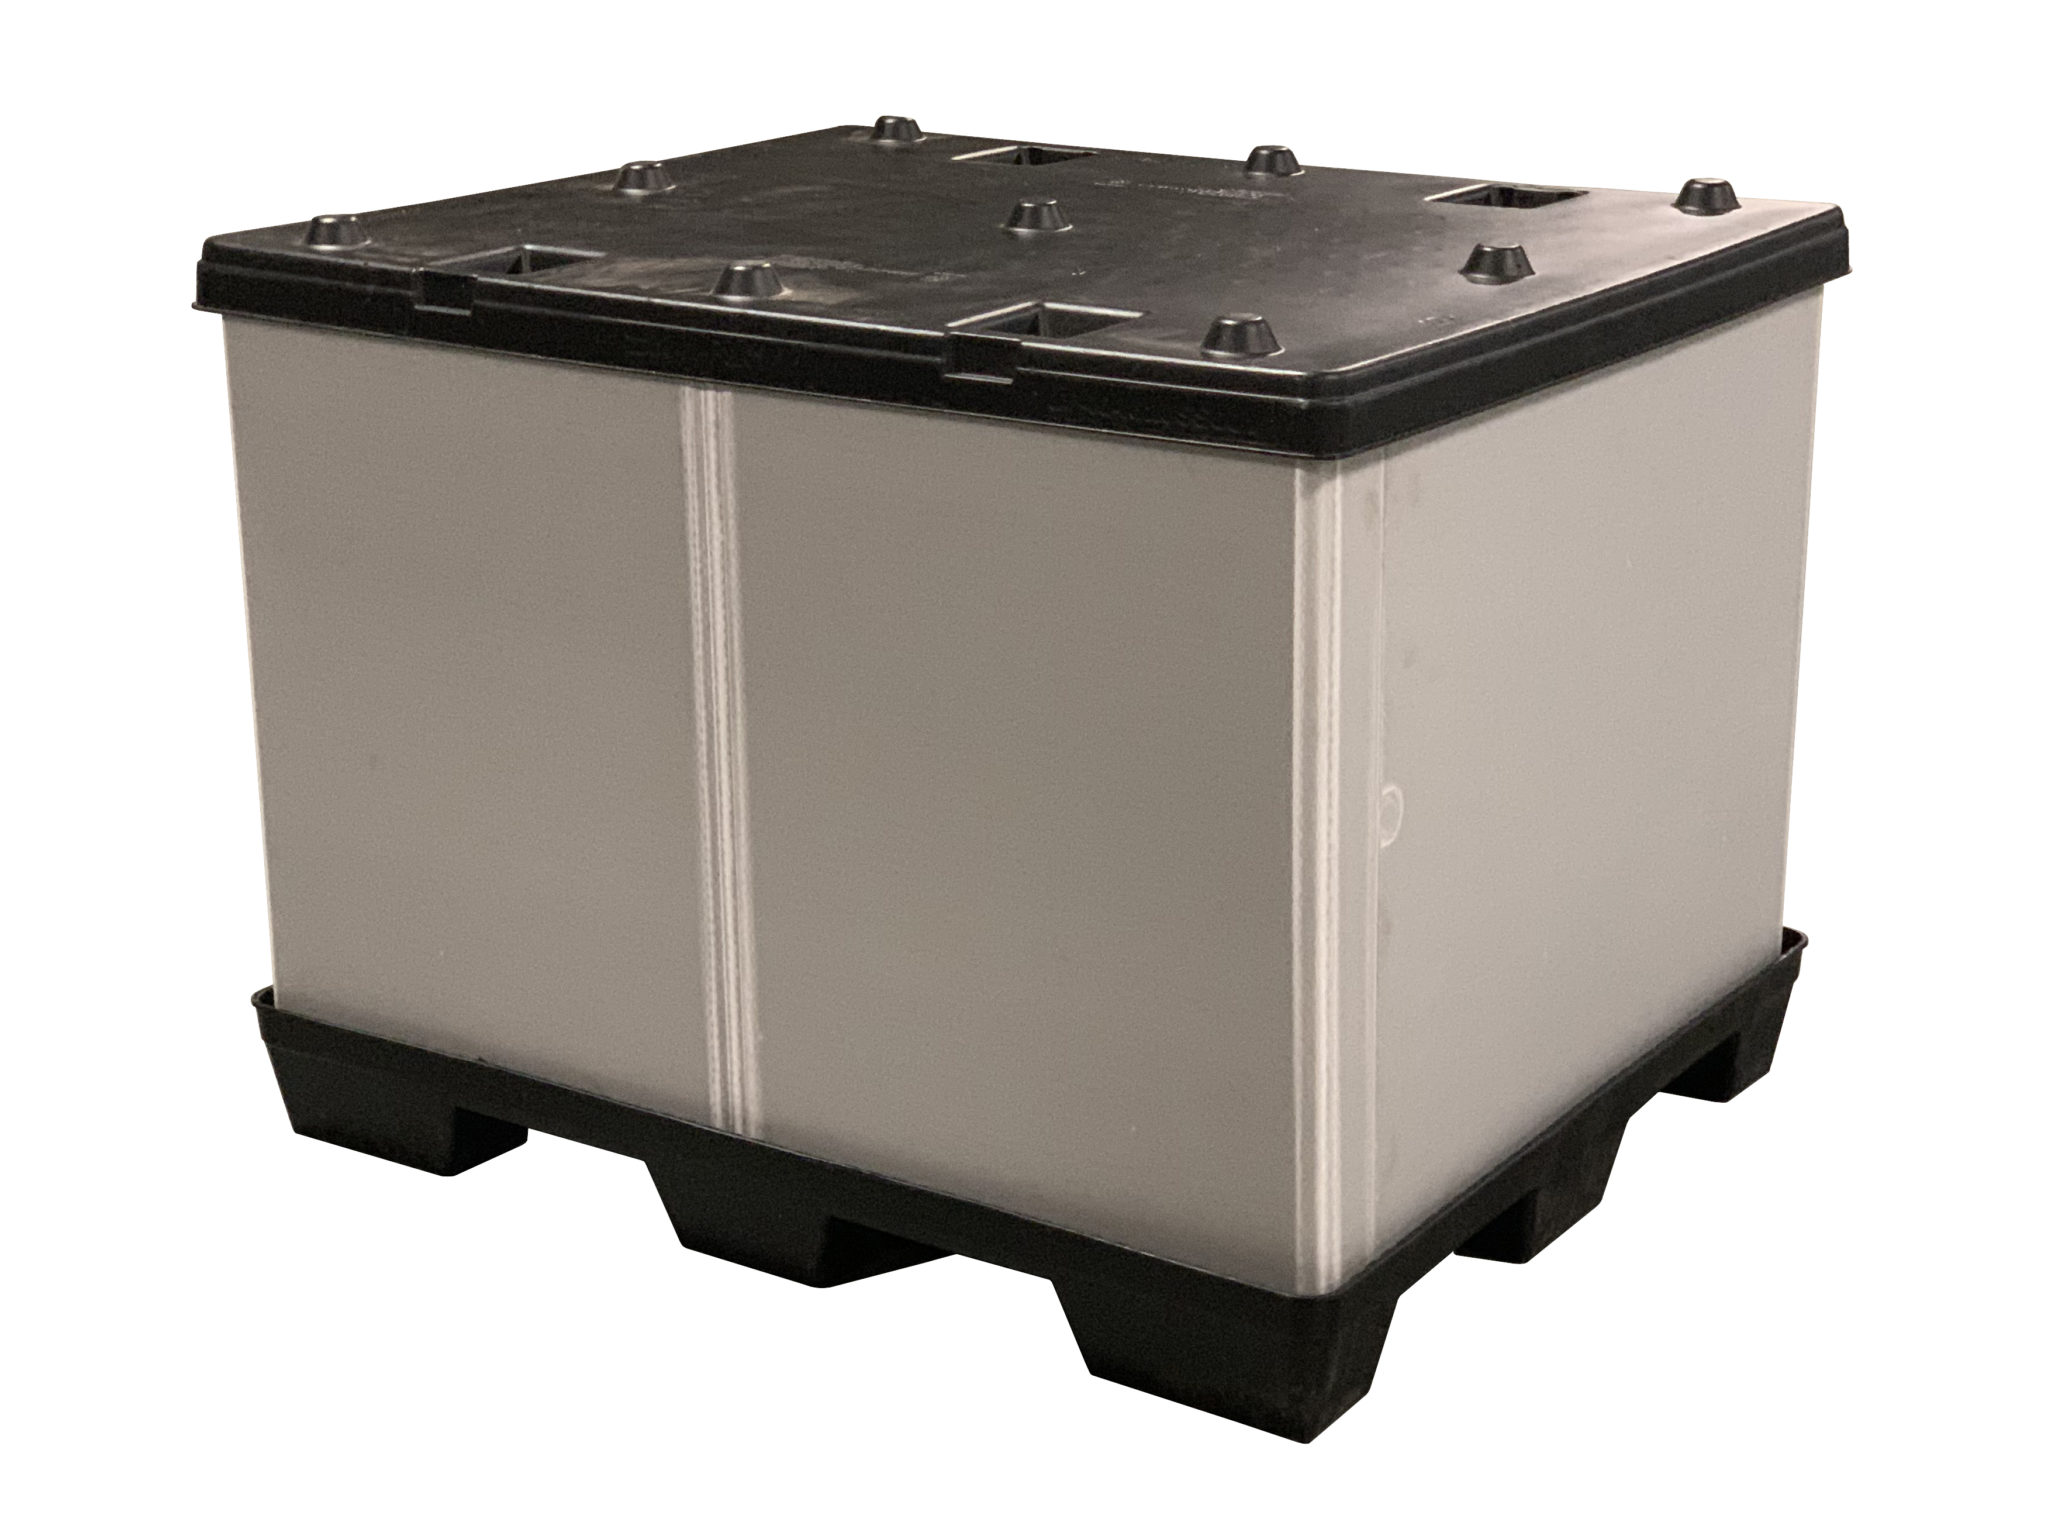 48 x 40 x 30 – Reusable Bulk Container